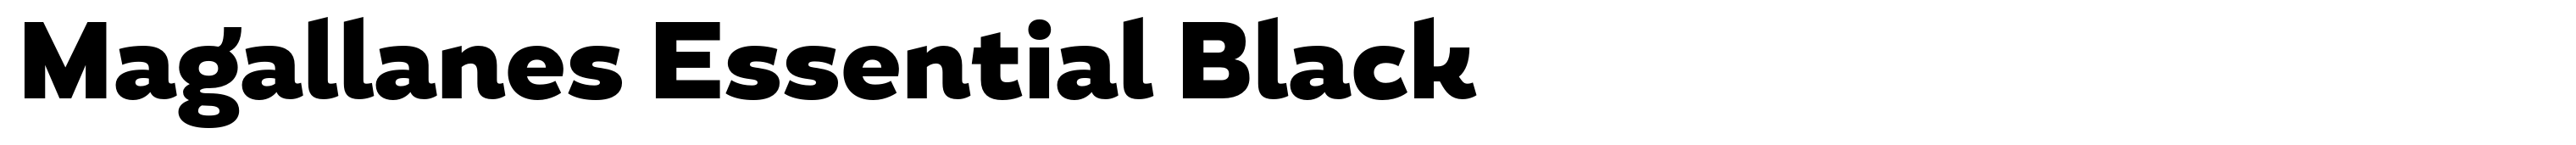 Magallanes Essential Black